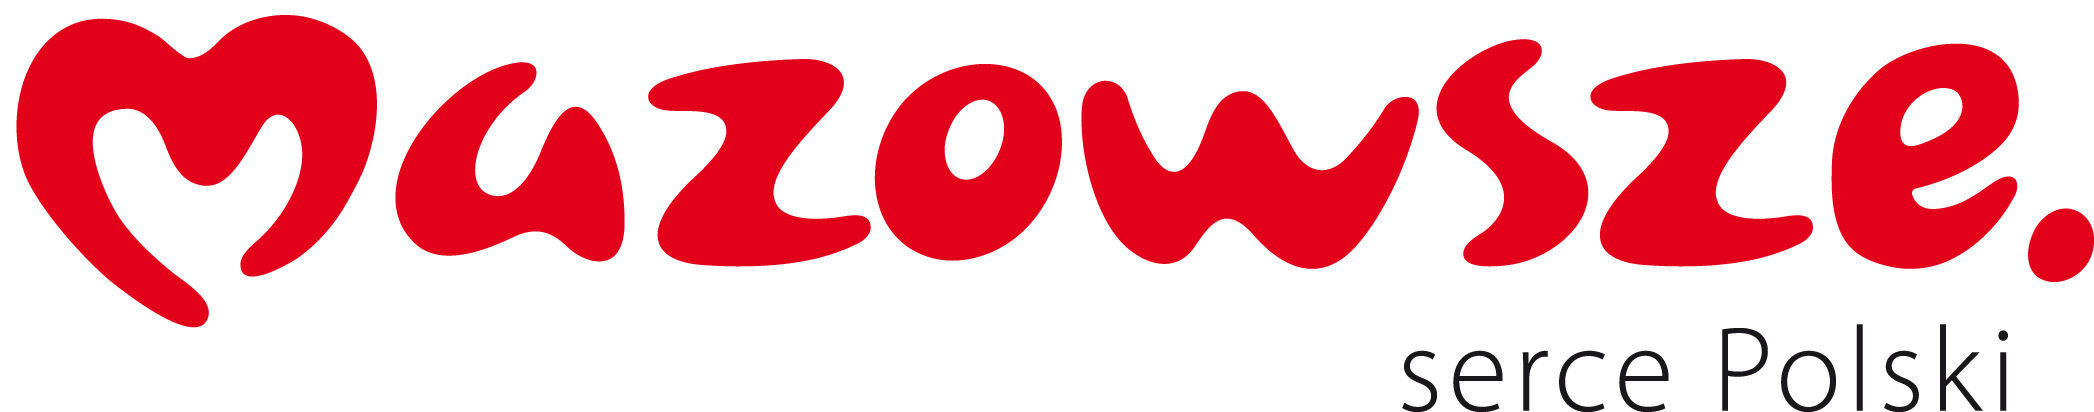 logo mazowsze serce polski